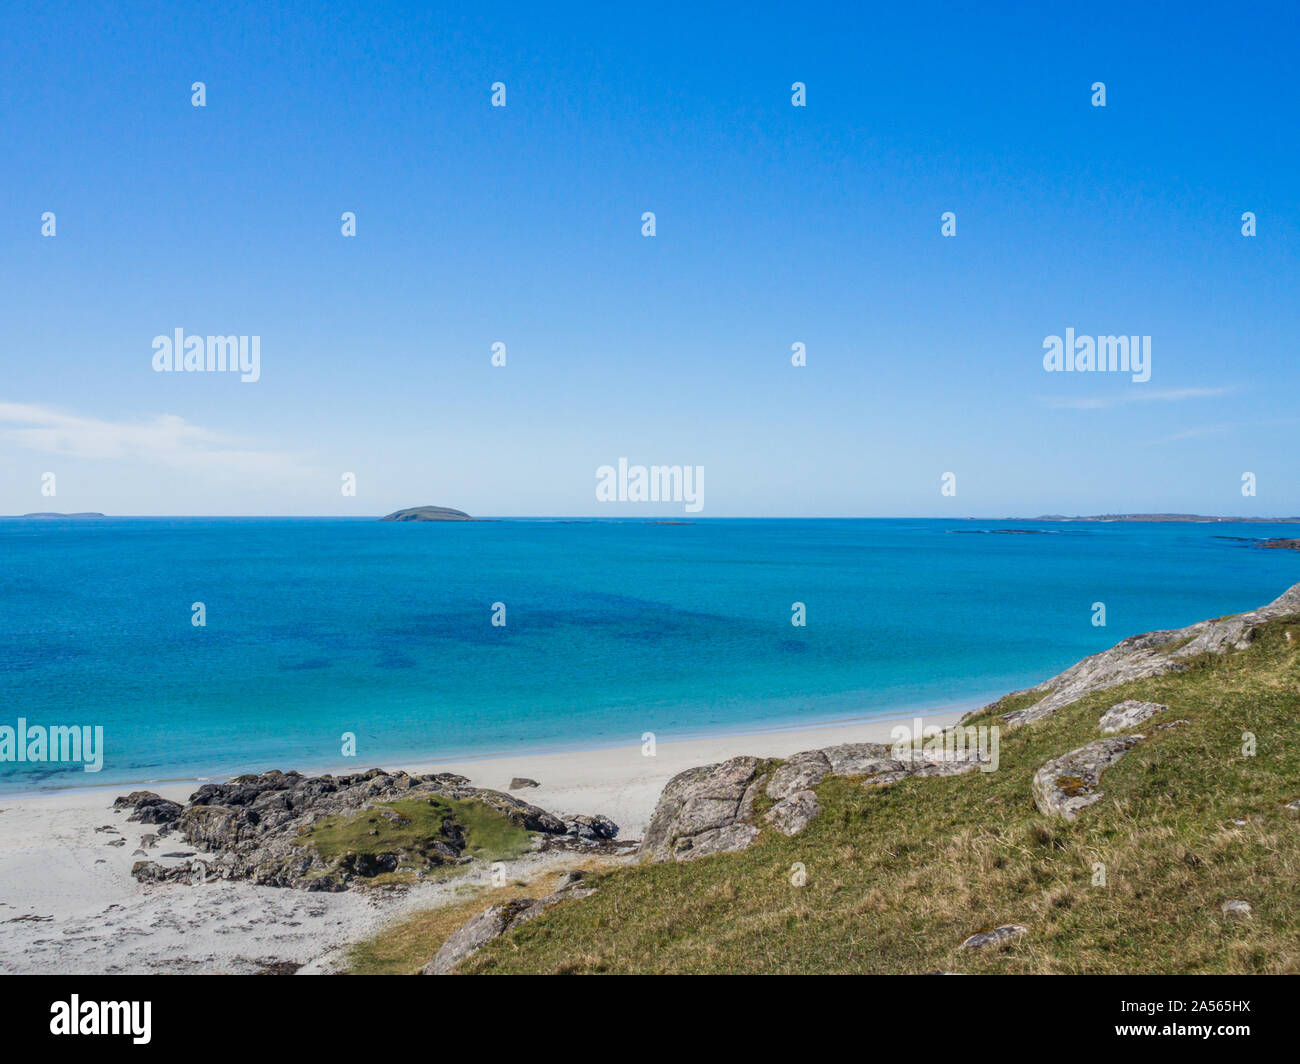 Bonnie Prince Charlie's beach on the Isle of Eriskay, Outer Hebrides, Scotland UK Stock Photo